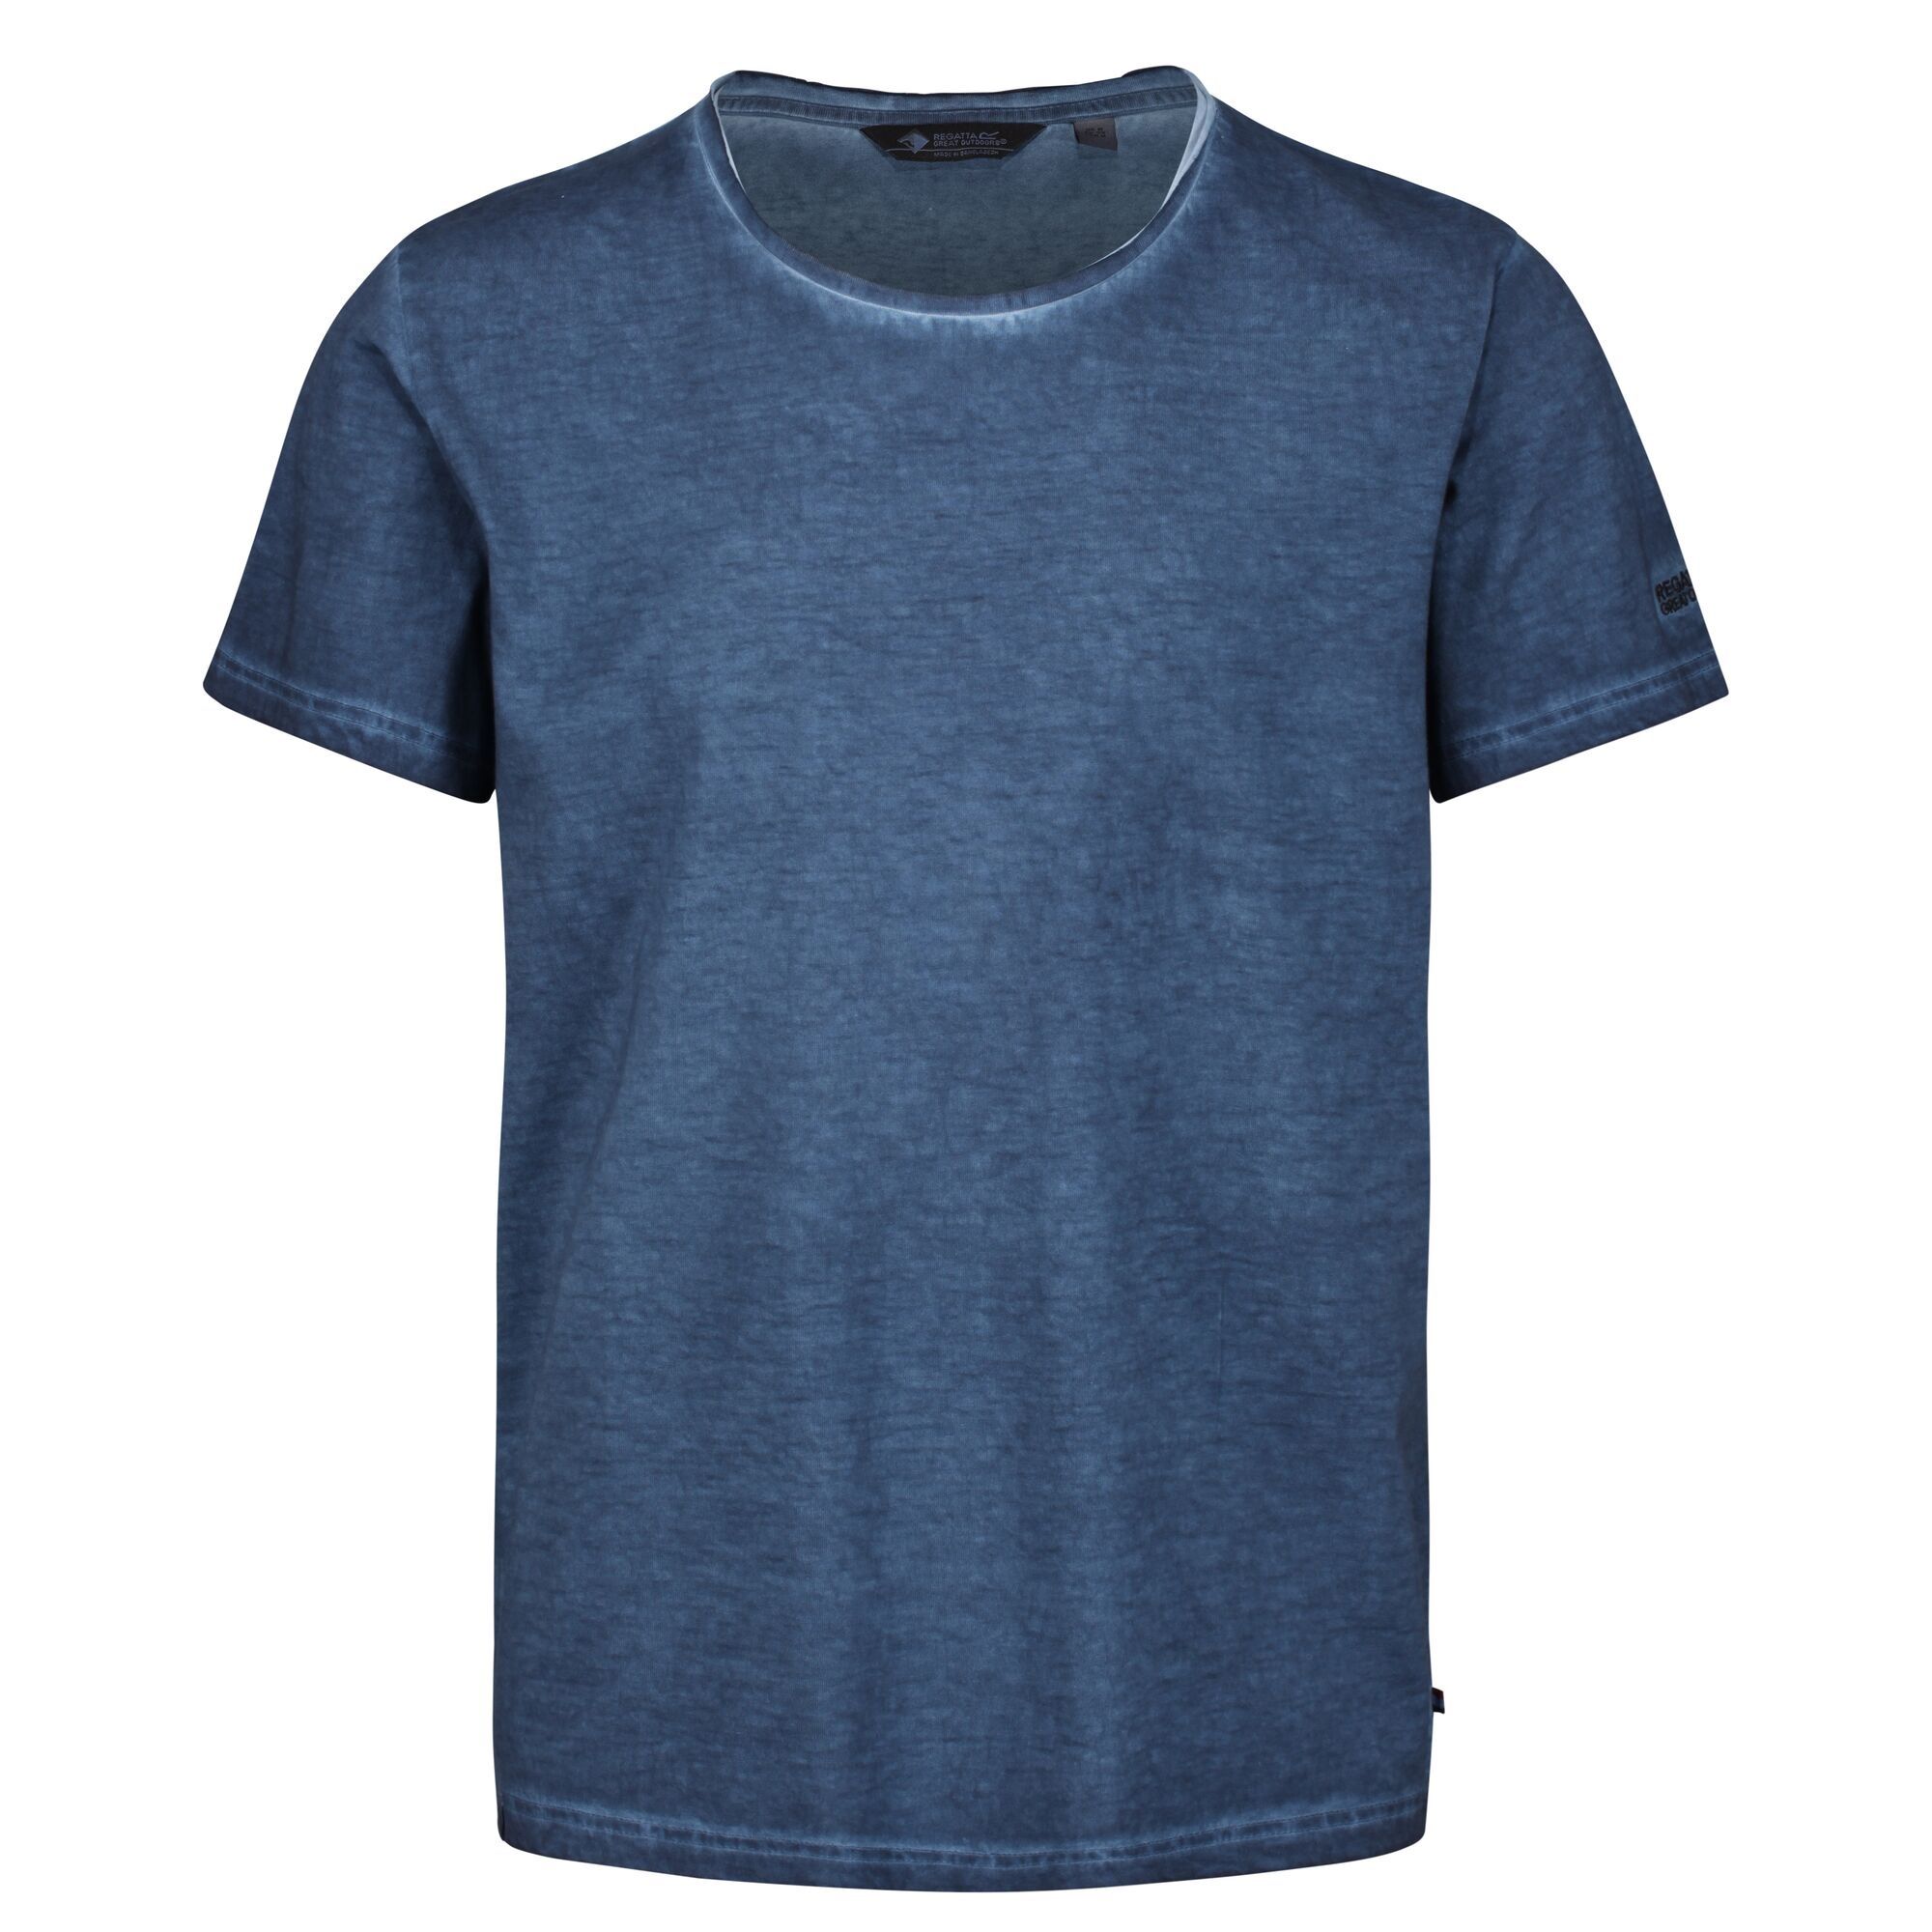 Material: 100% organic cotton. Crew neck. Short sleeves. Regular fit.